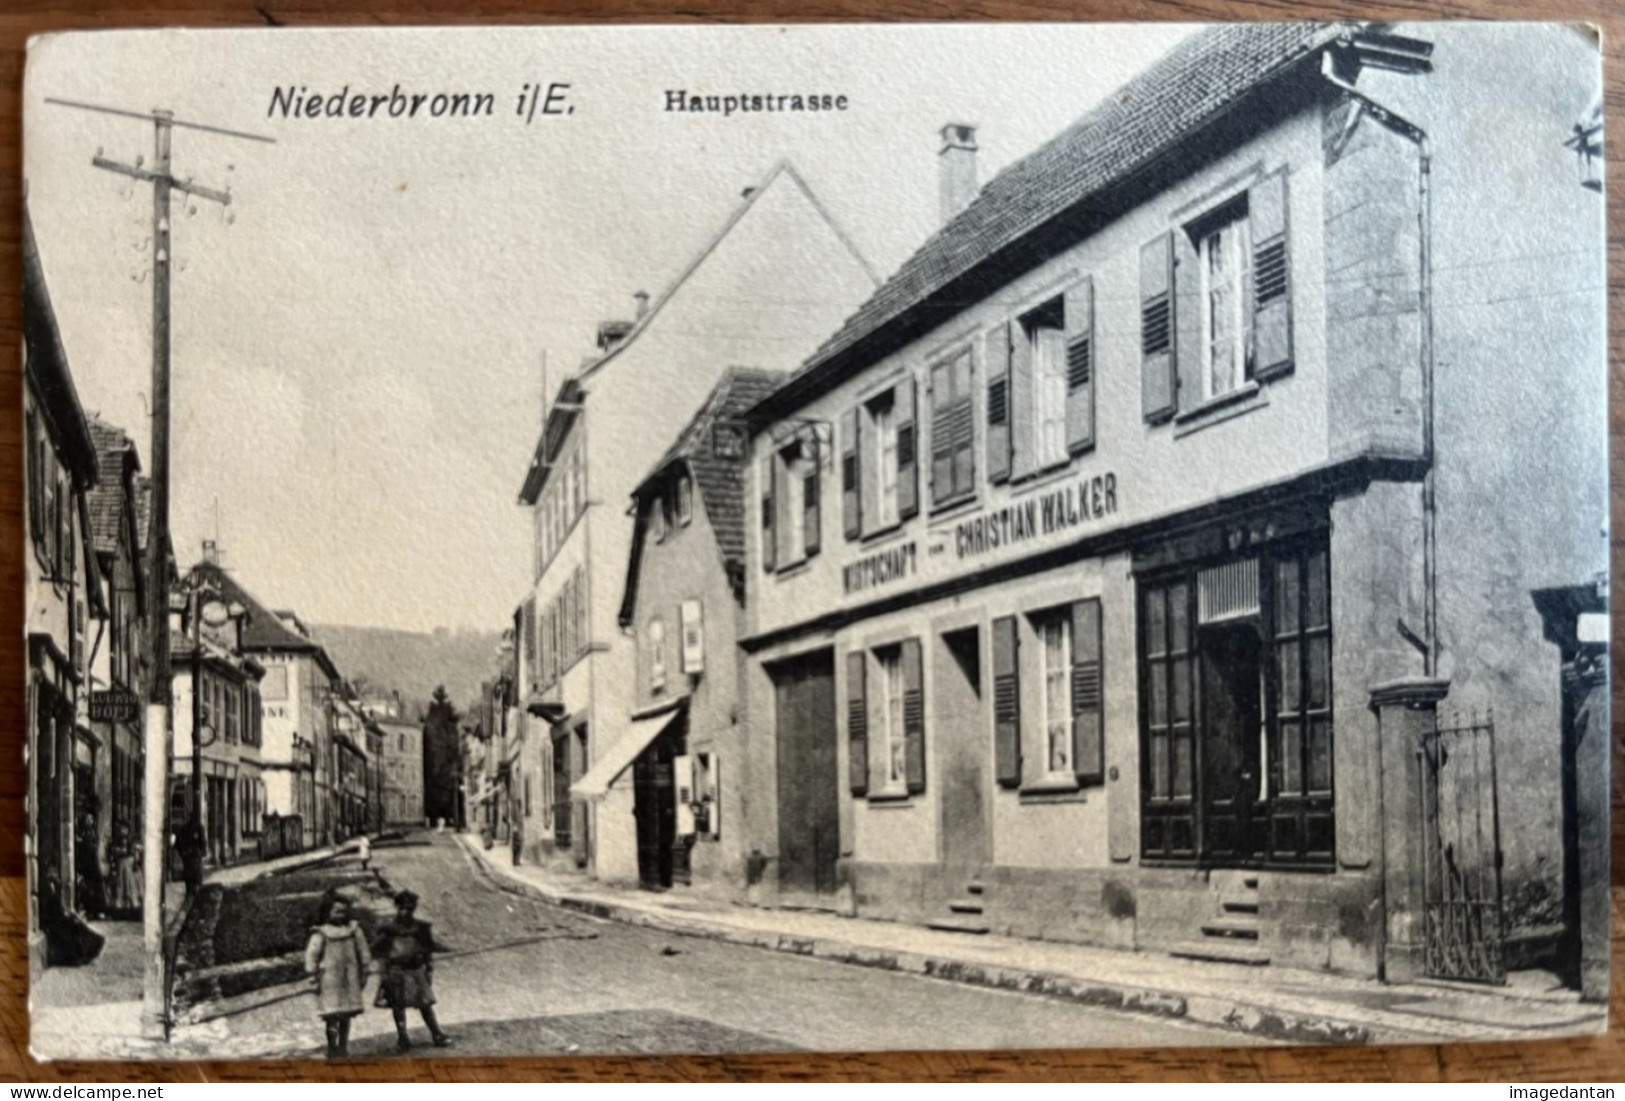 Niederbronn I/E - Wirtschaft Von Christian Walker - Hauptstrasse - Niederbronn Les Bains